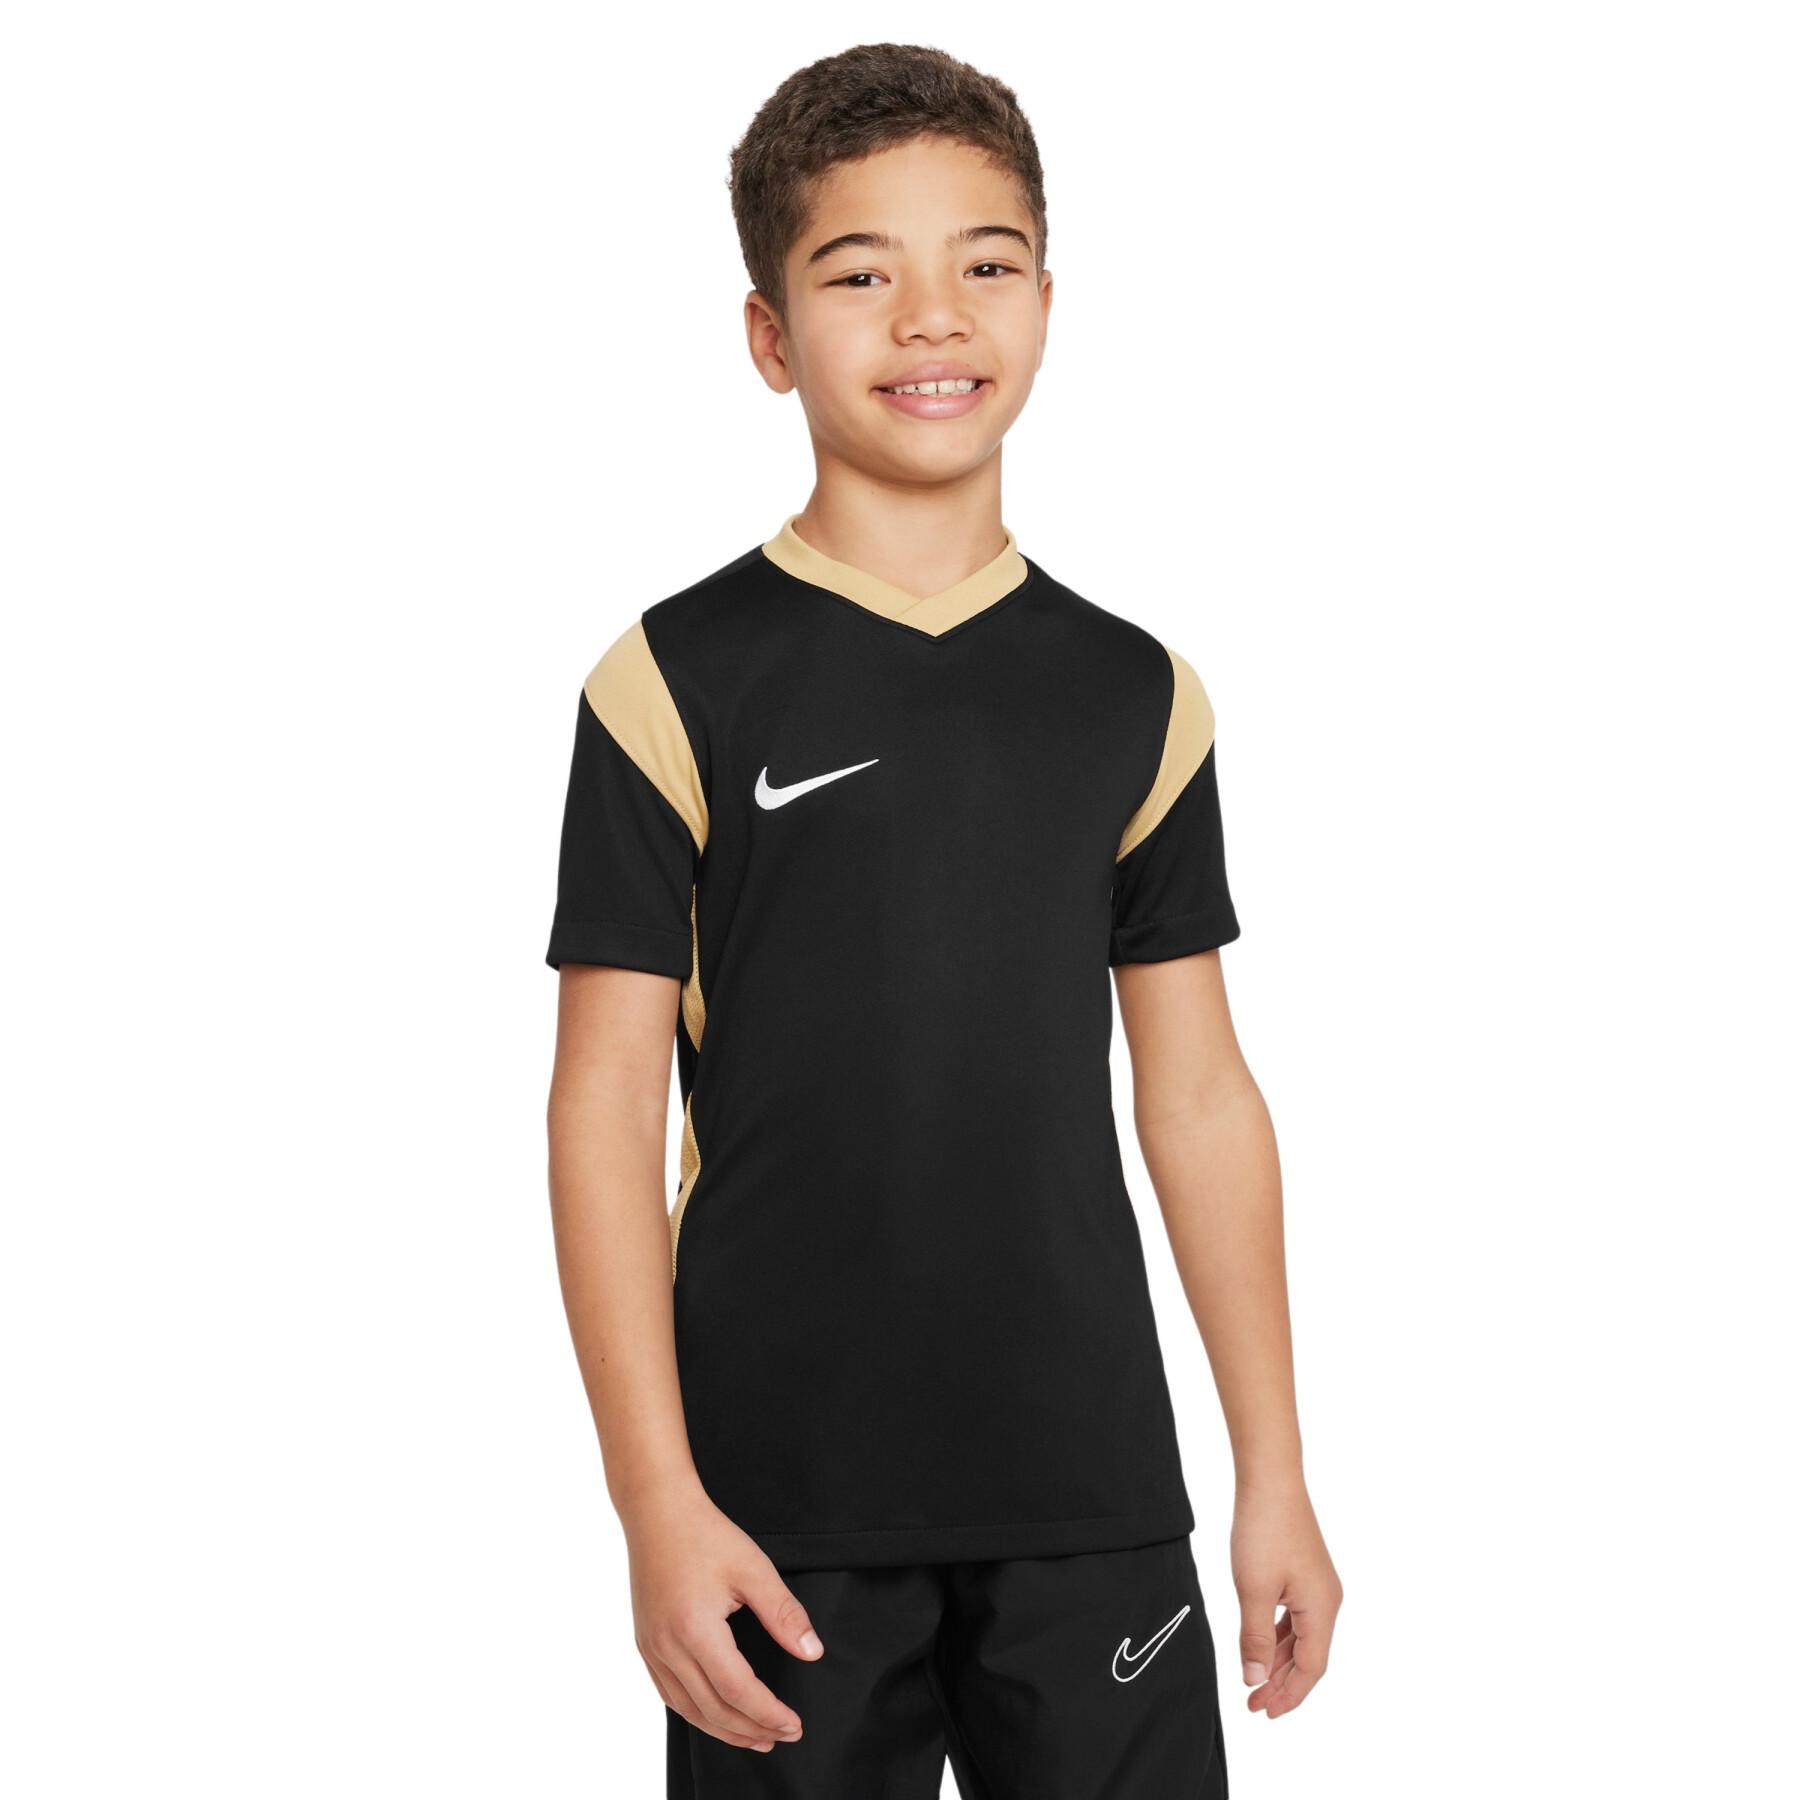 Camiseta para niños Nike Dynamic Fit Derby III